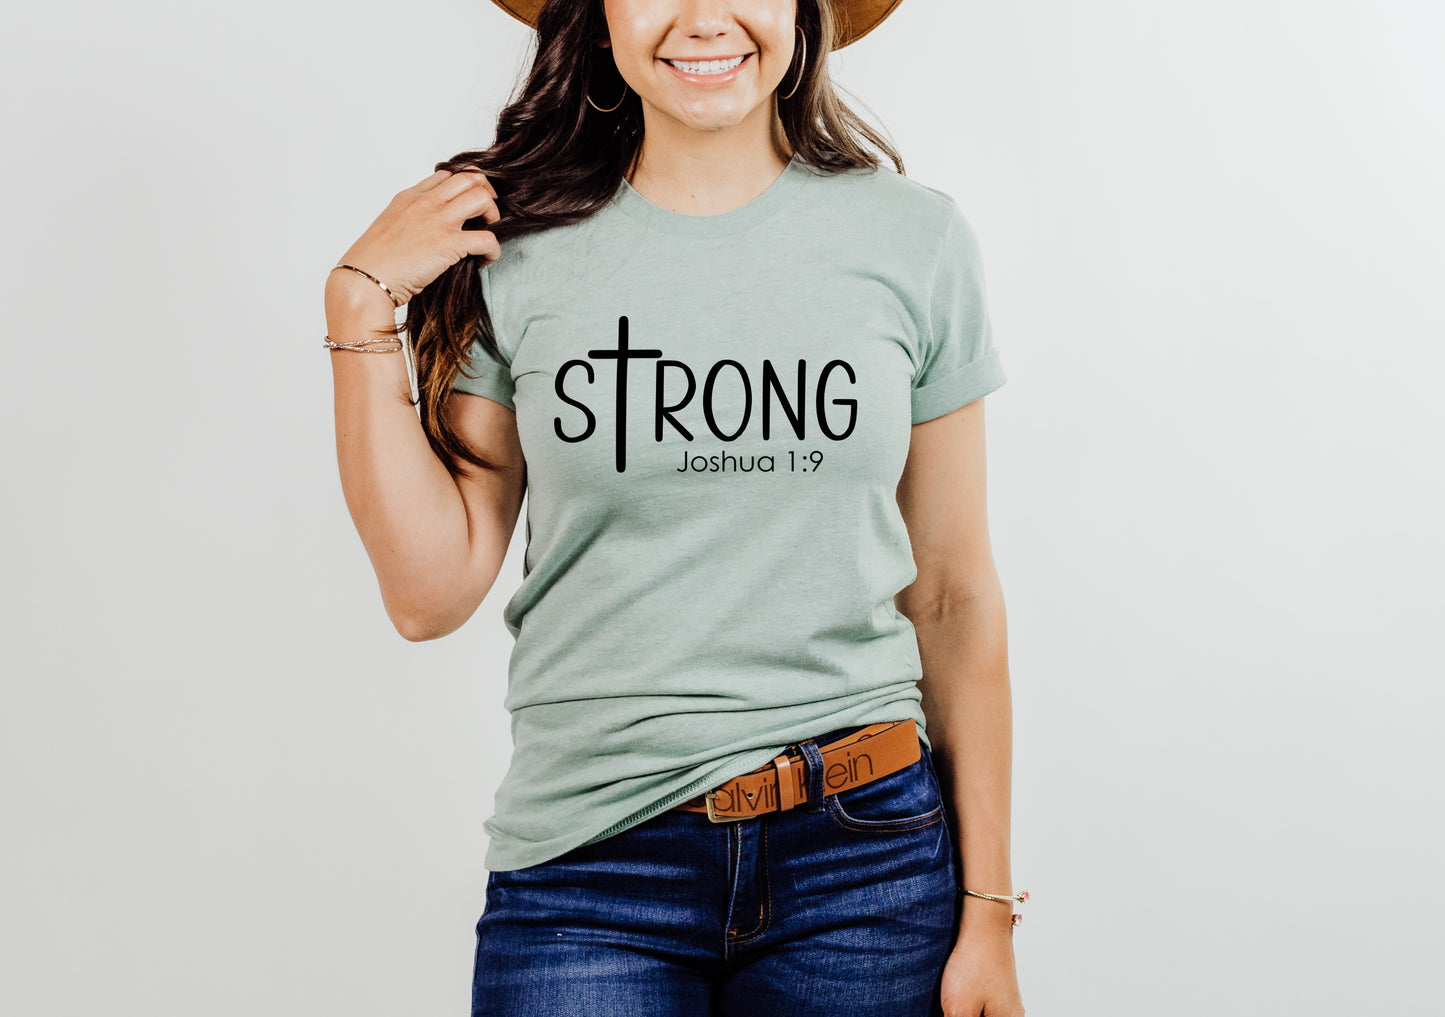 Strong Joshua 1 9, Jesus Love, Christian Gift Unisex Tee Novelty T-Shirt